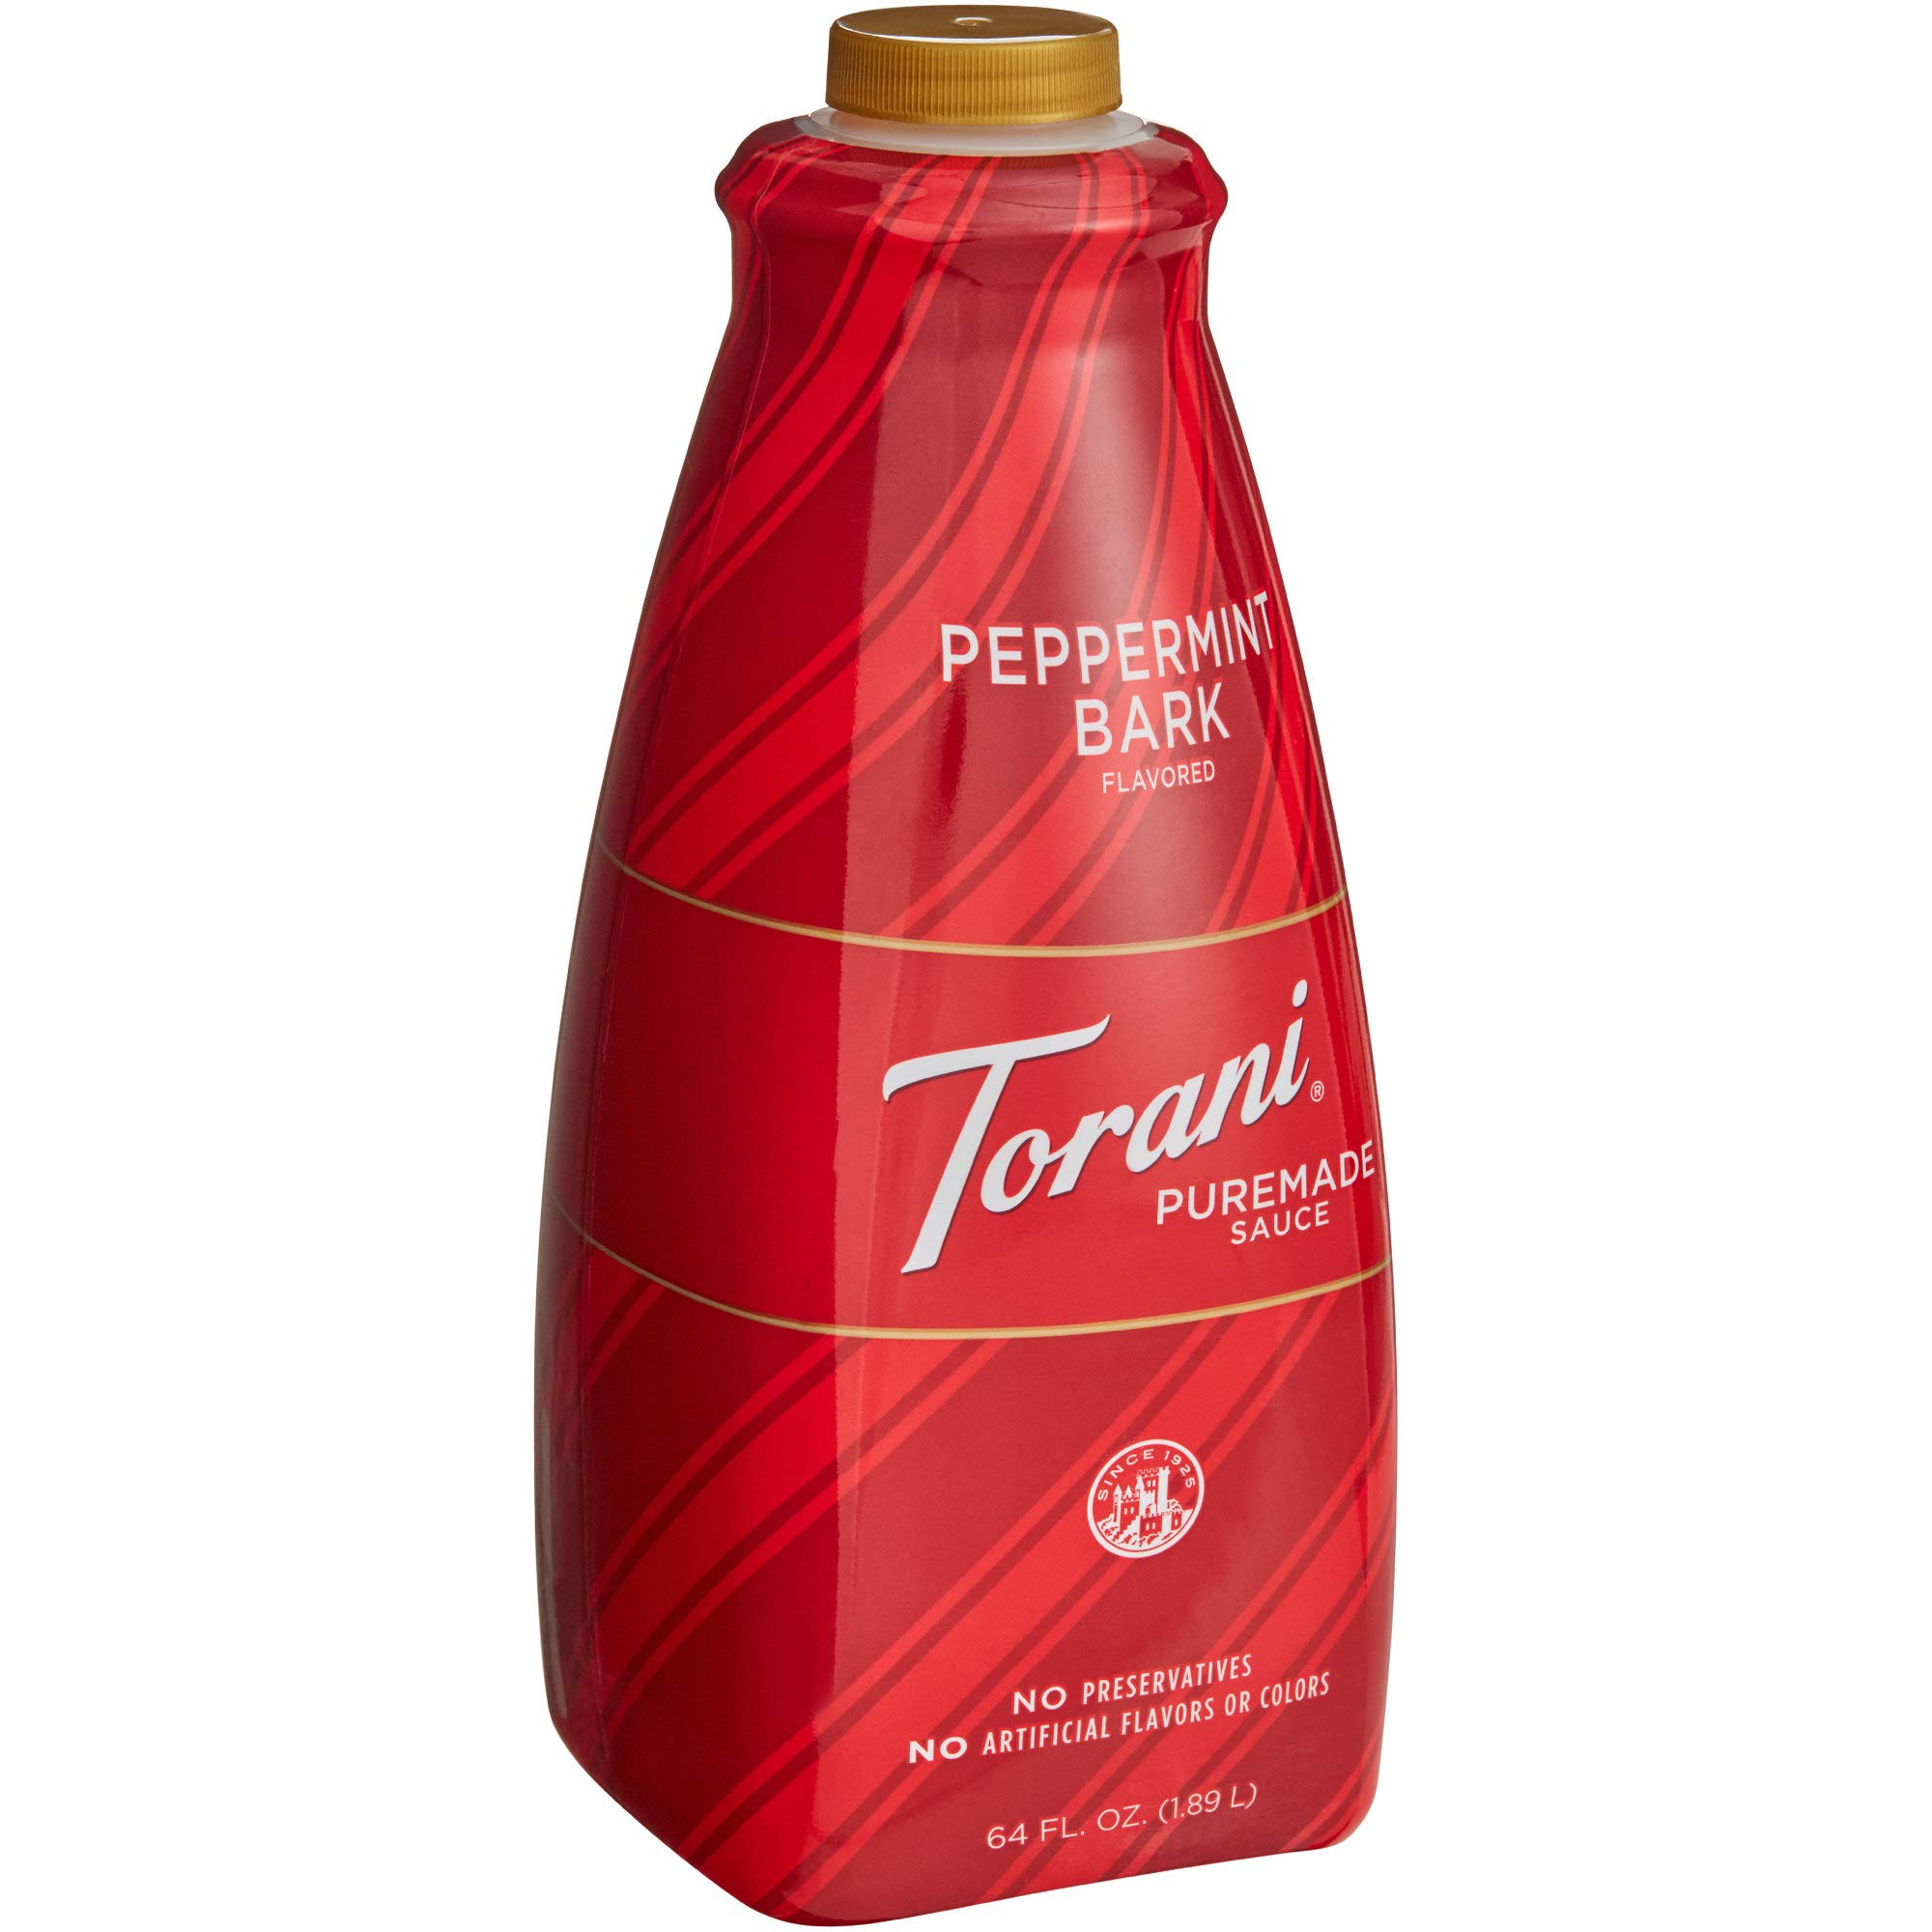 Torani Puremade Sauce, Peppermint Bark Flavor, GMO Free & Gluten Free, 64 Fl. Oz. 1.89 L